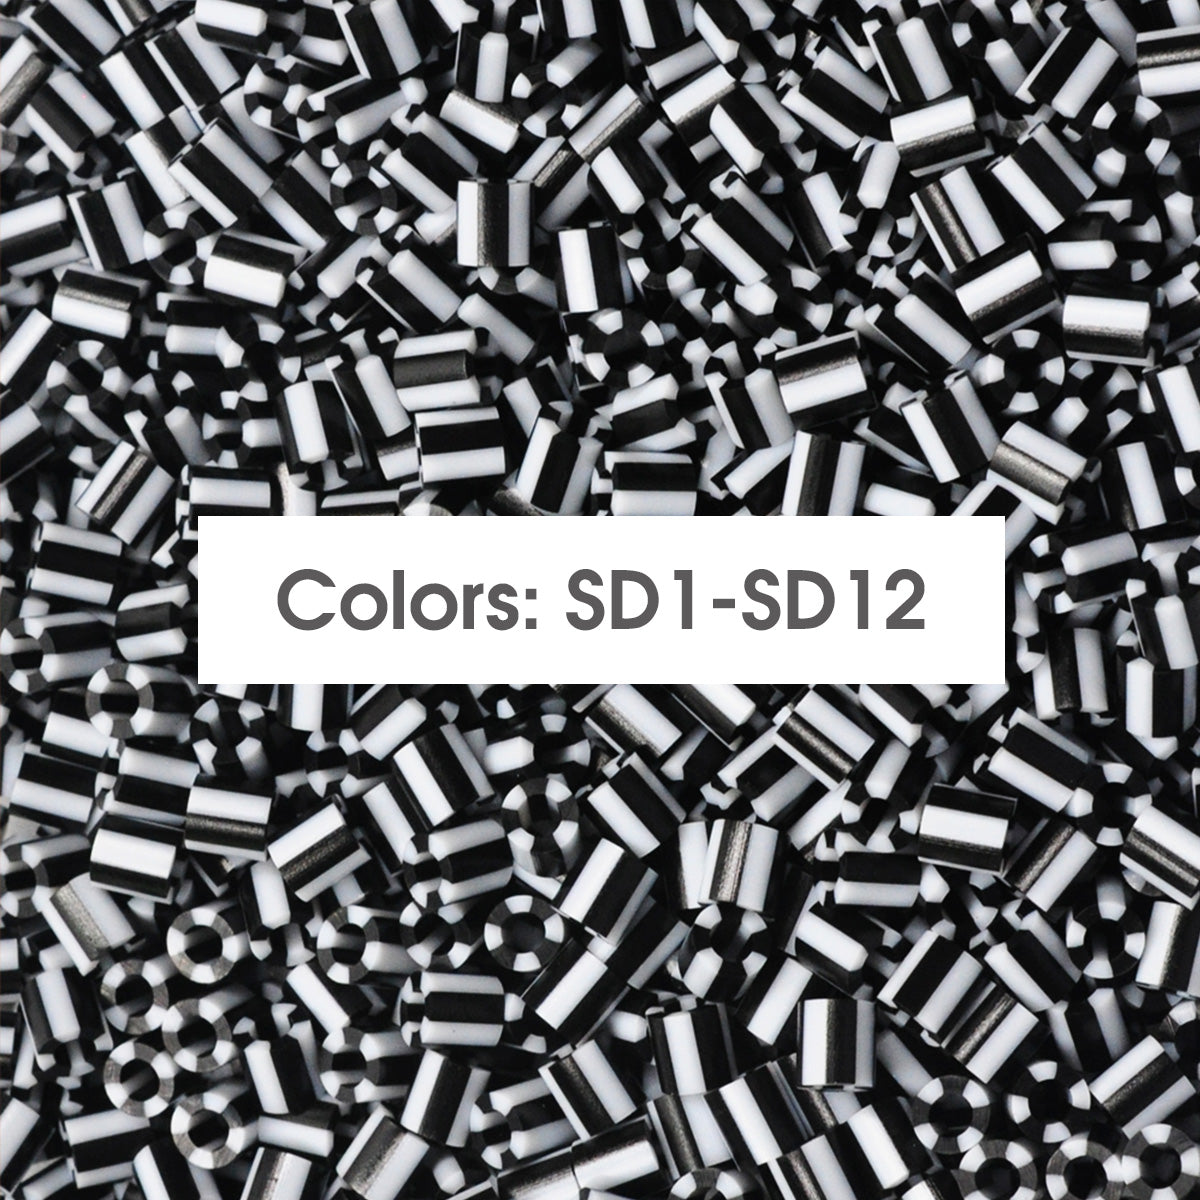 (SD1-SD12 Colores exue) S-1KG in Bulk